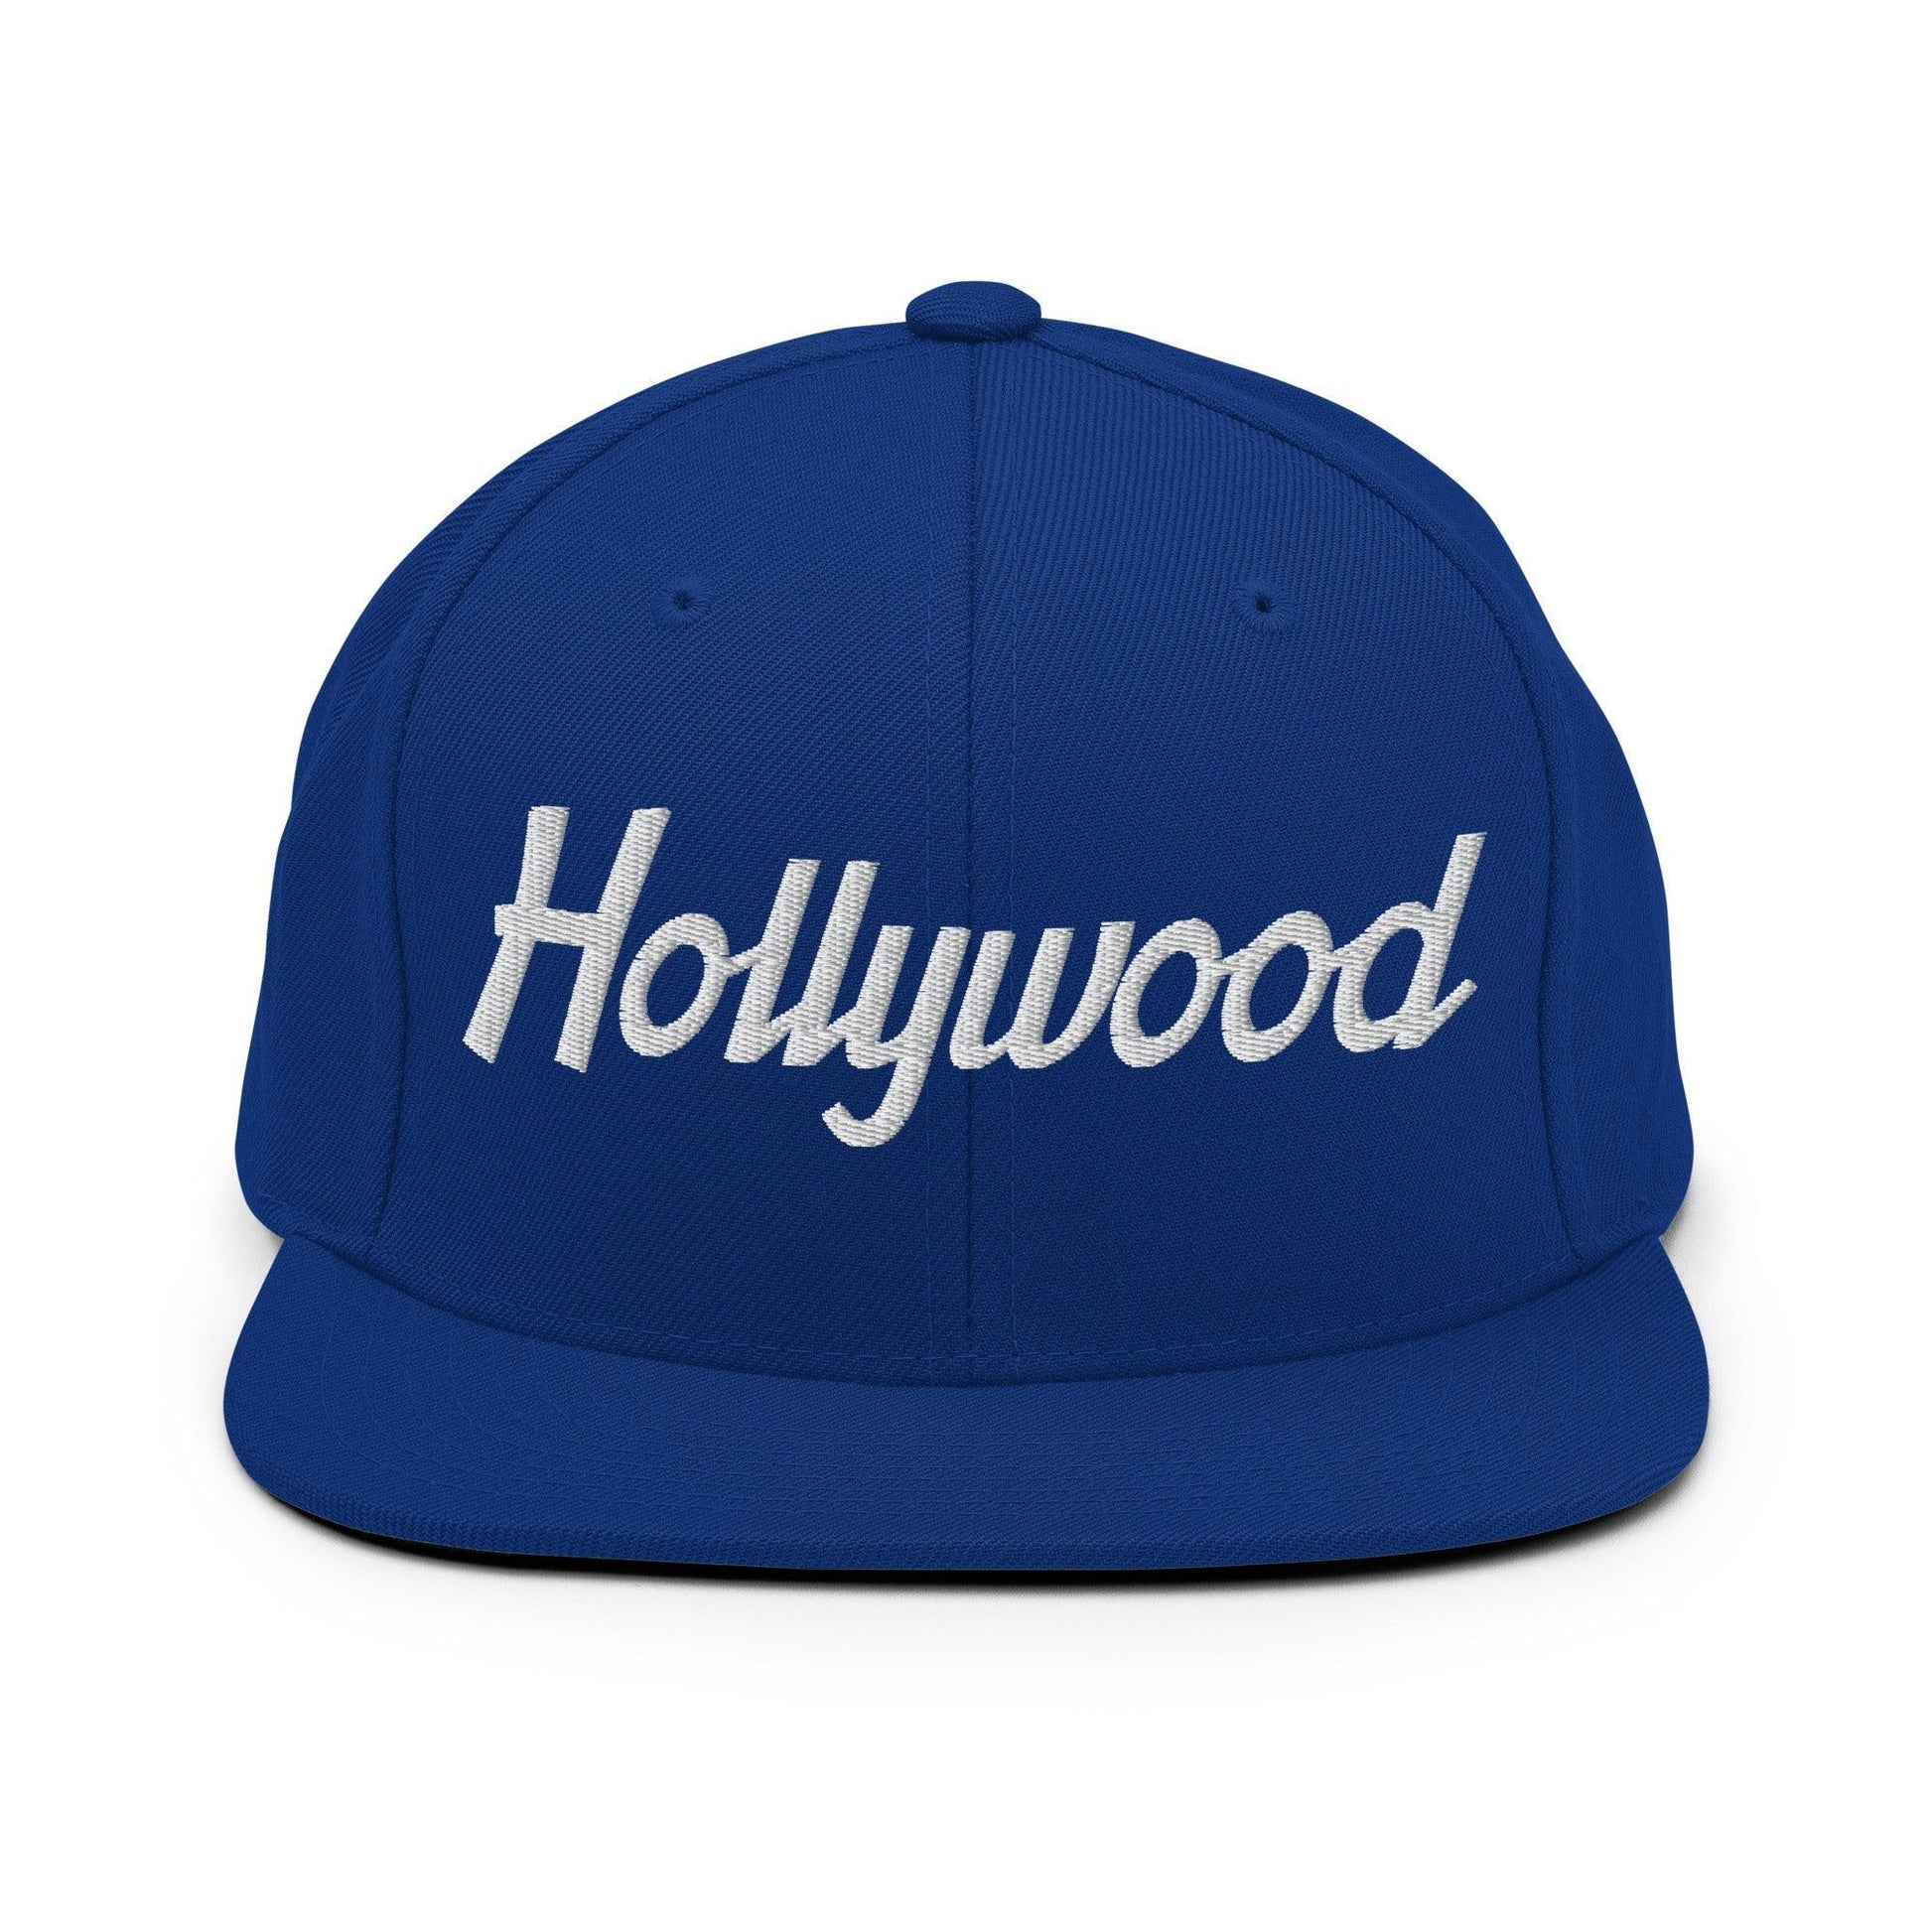 Hollywood Script Snapback Hat Royal Blue